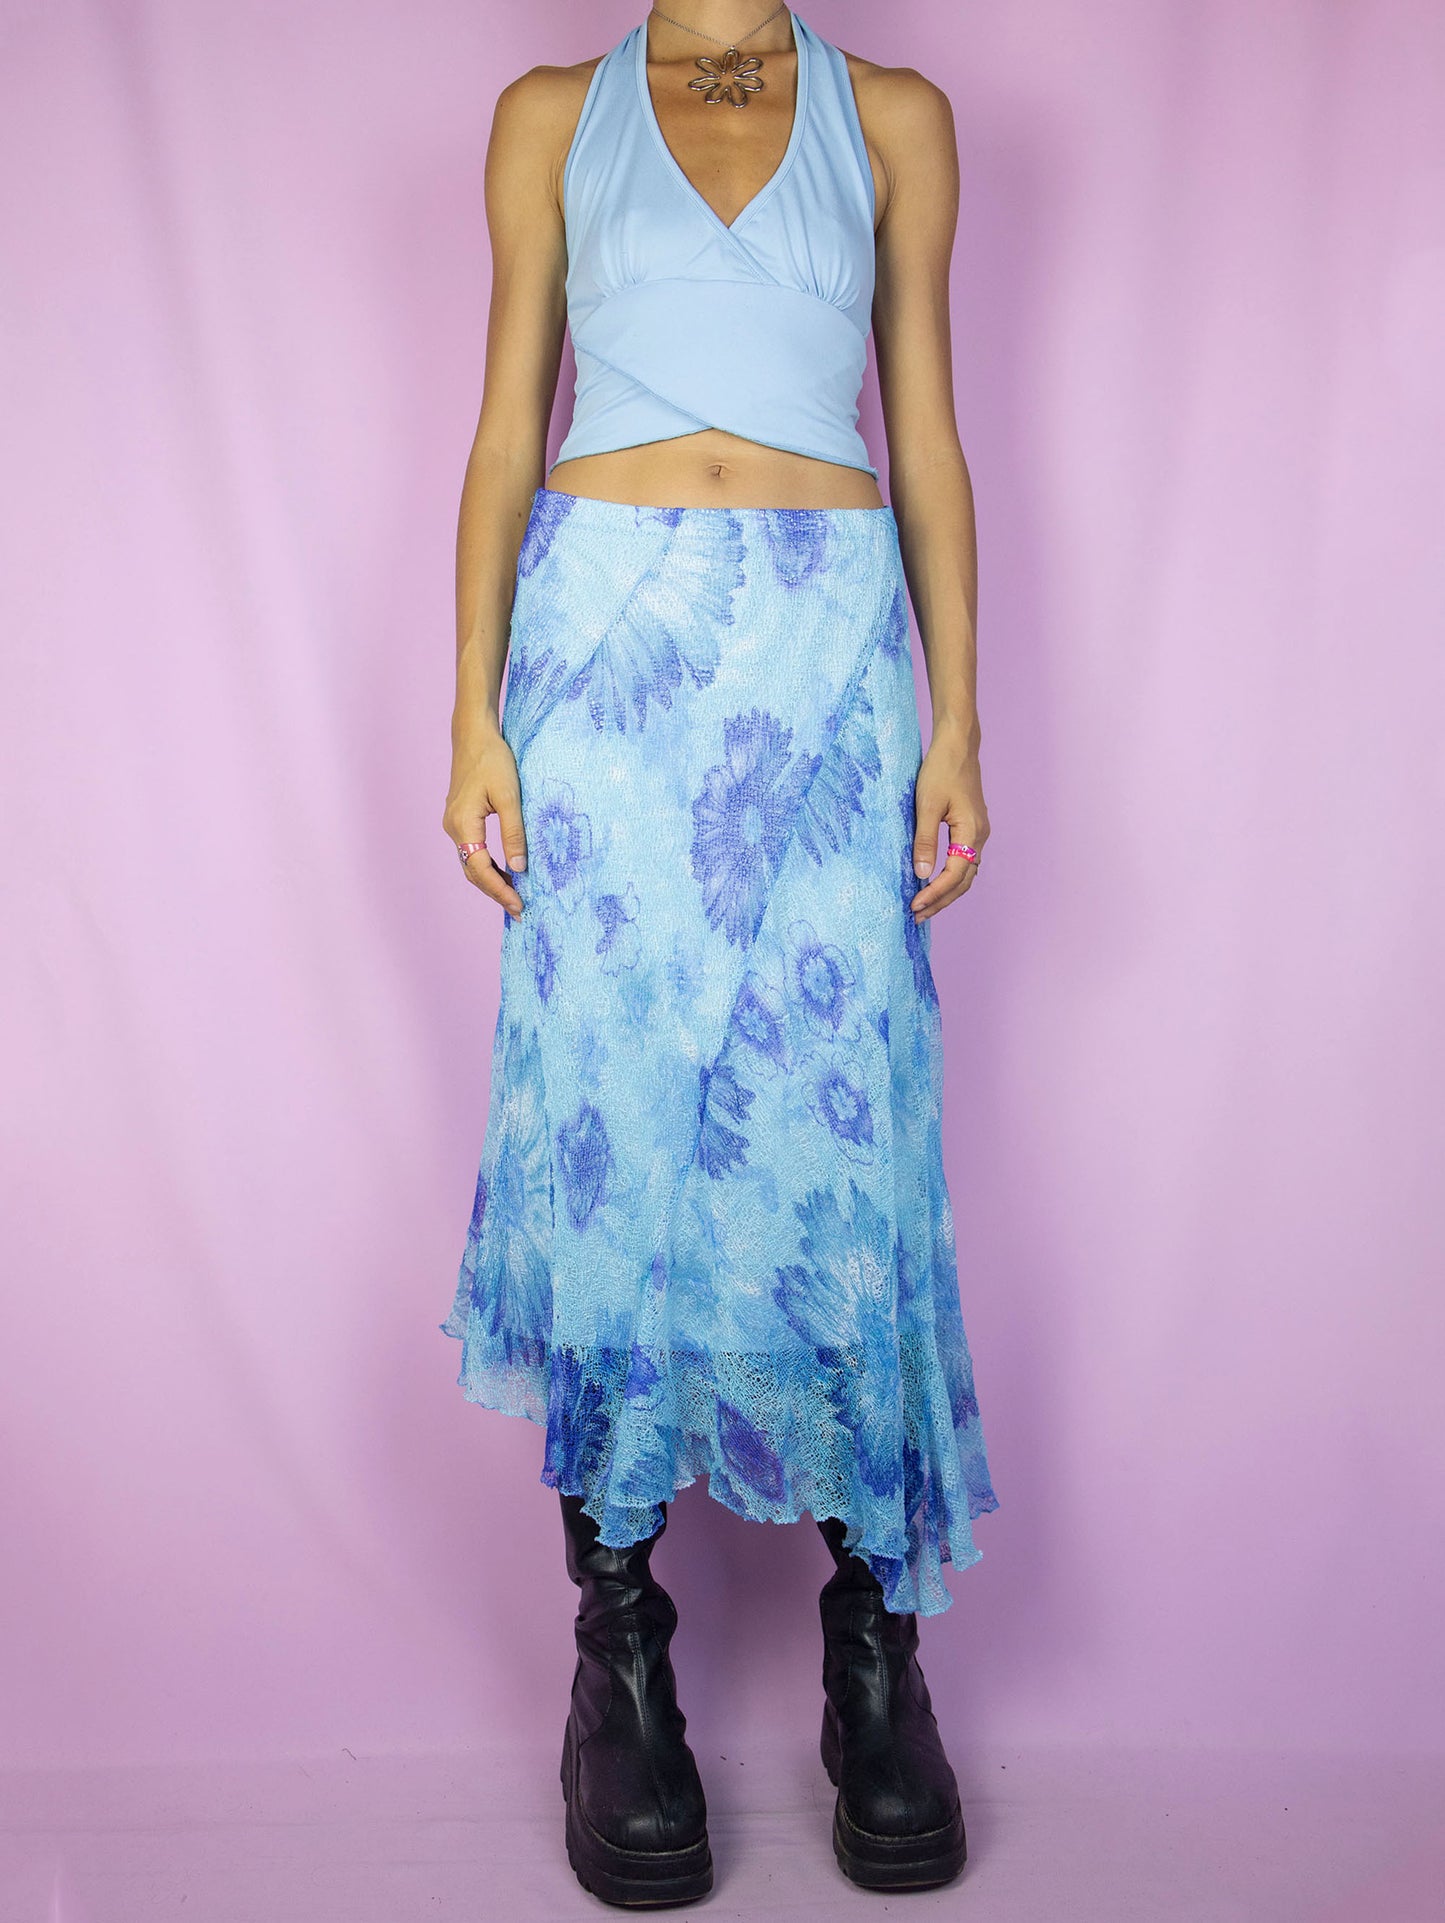 The Y2K Blue Mesh Midi Skirt is a vintage asymmetrical floral graphic skirt with an elastic waist. Boho fairy grunge 2000s summer maxi skirt.